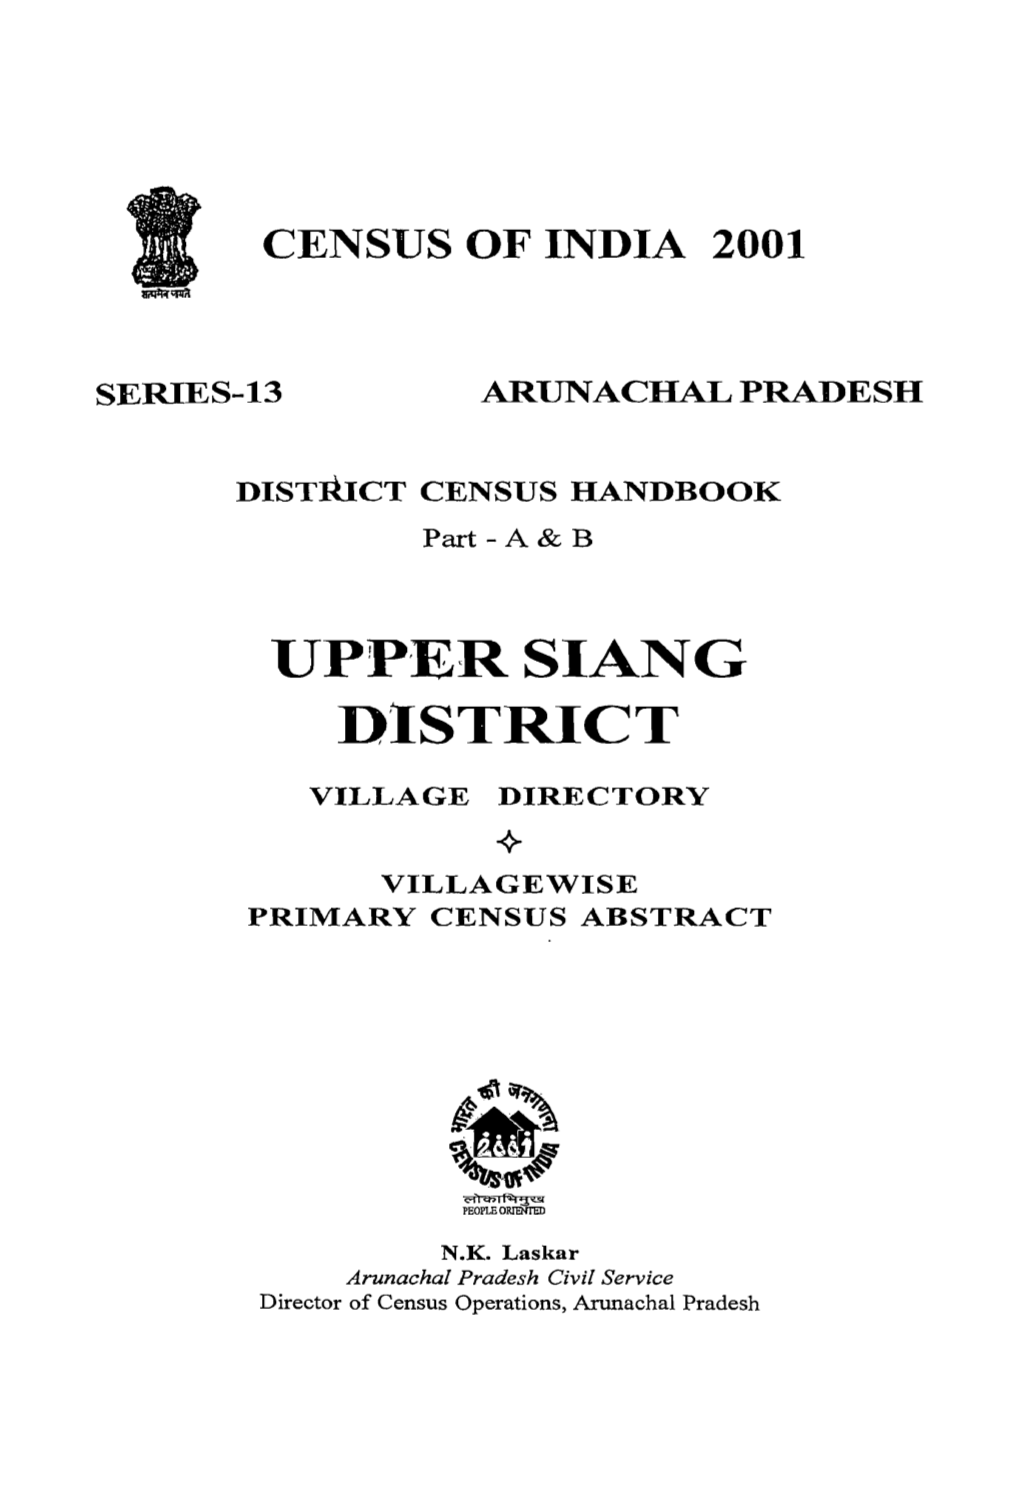 District Census Handbook, Upper Siang, Part XII-A & B, Series-13